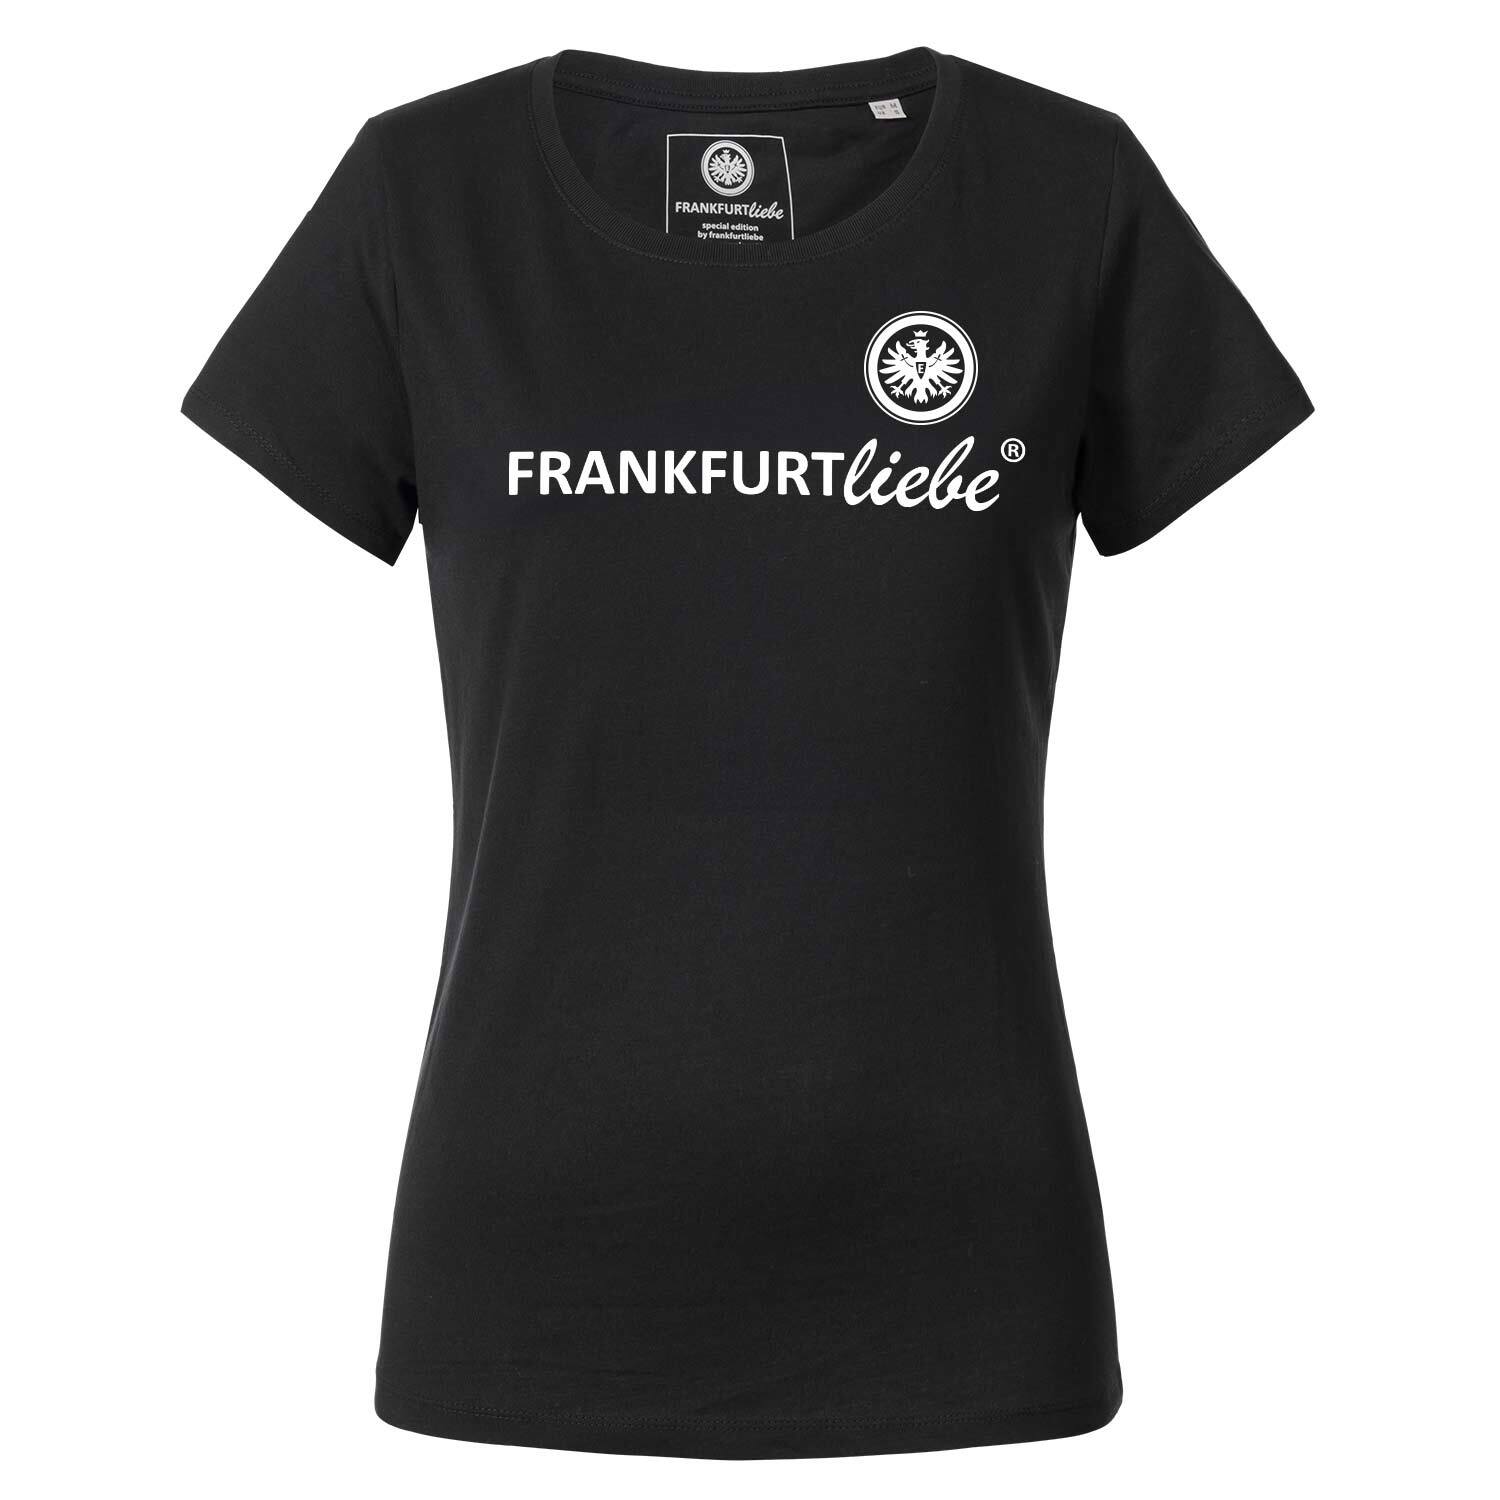 Bild 1: Damen T-Shirt Frankfurtliebe